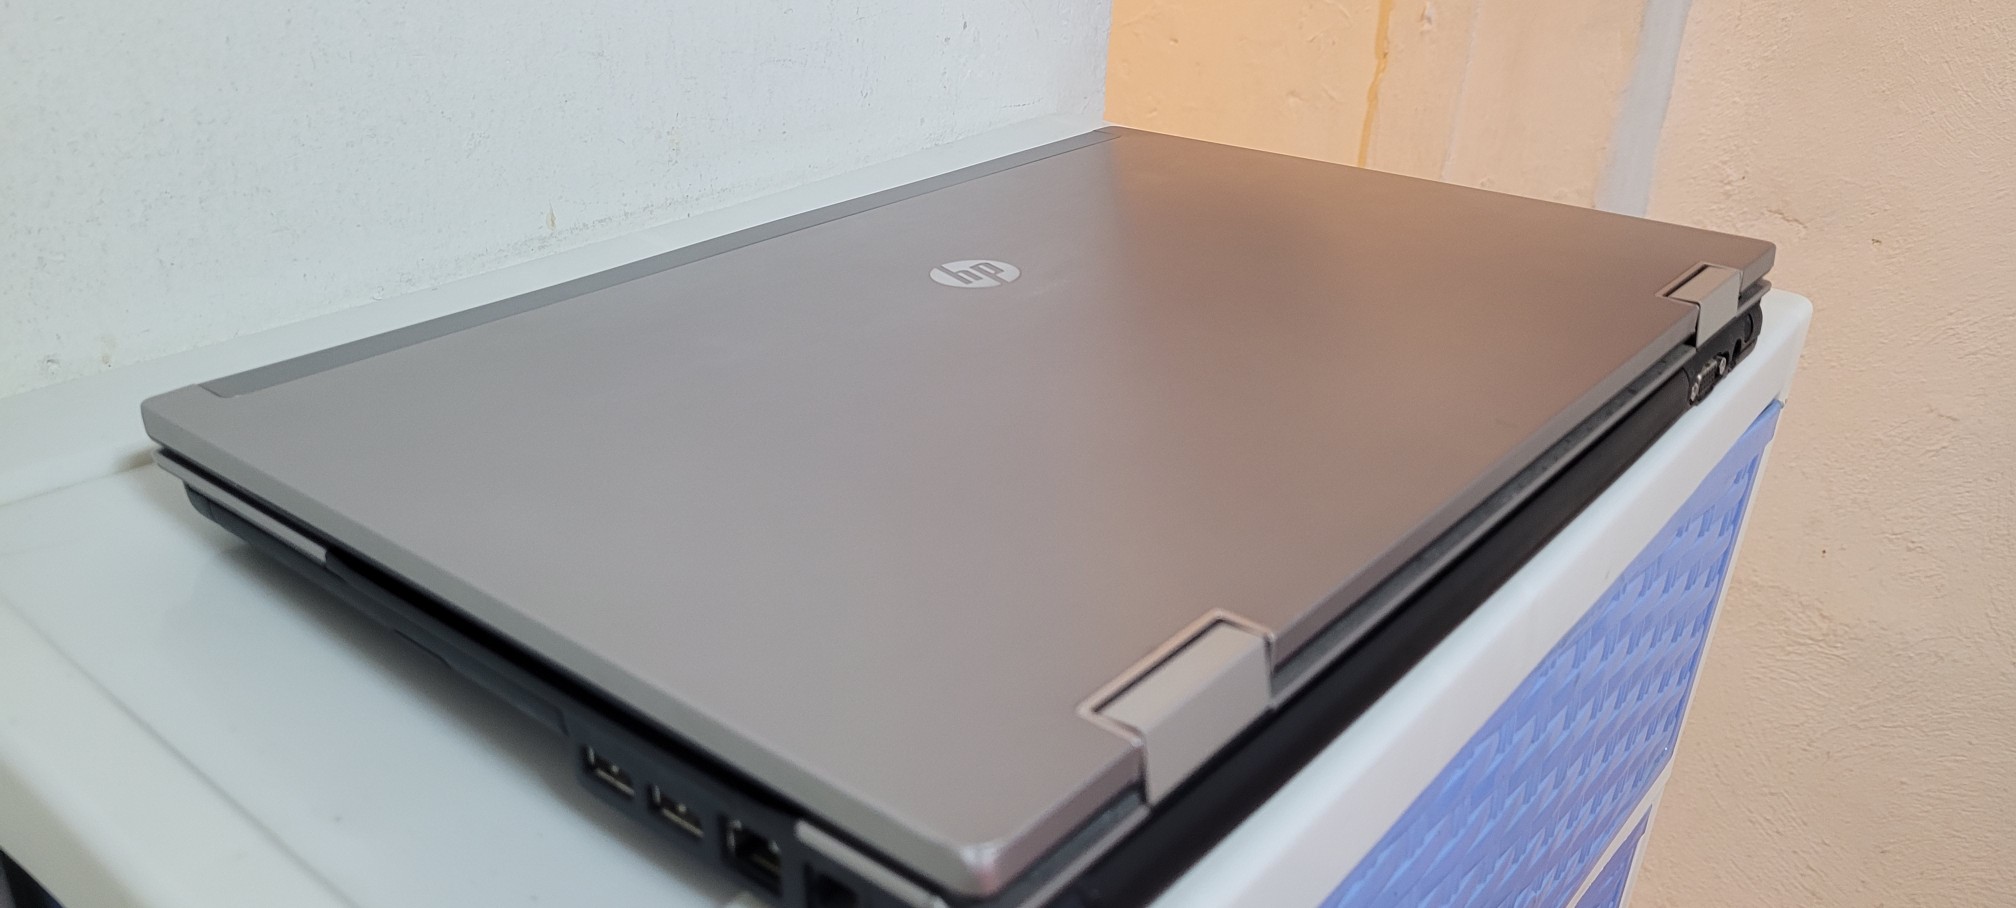 computadoras y laptops - Laptop hp ElitebooK 17 Pulg Core i7 2.8ghz Ram 8gb Disco SSD 128GB Nvidea 4gb 2